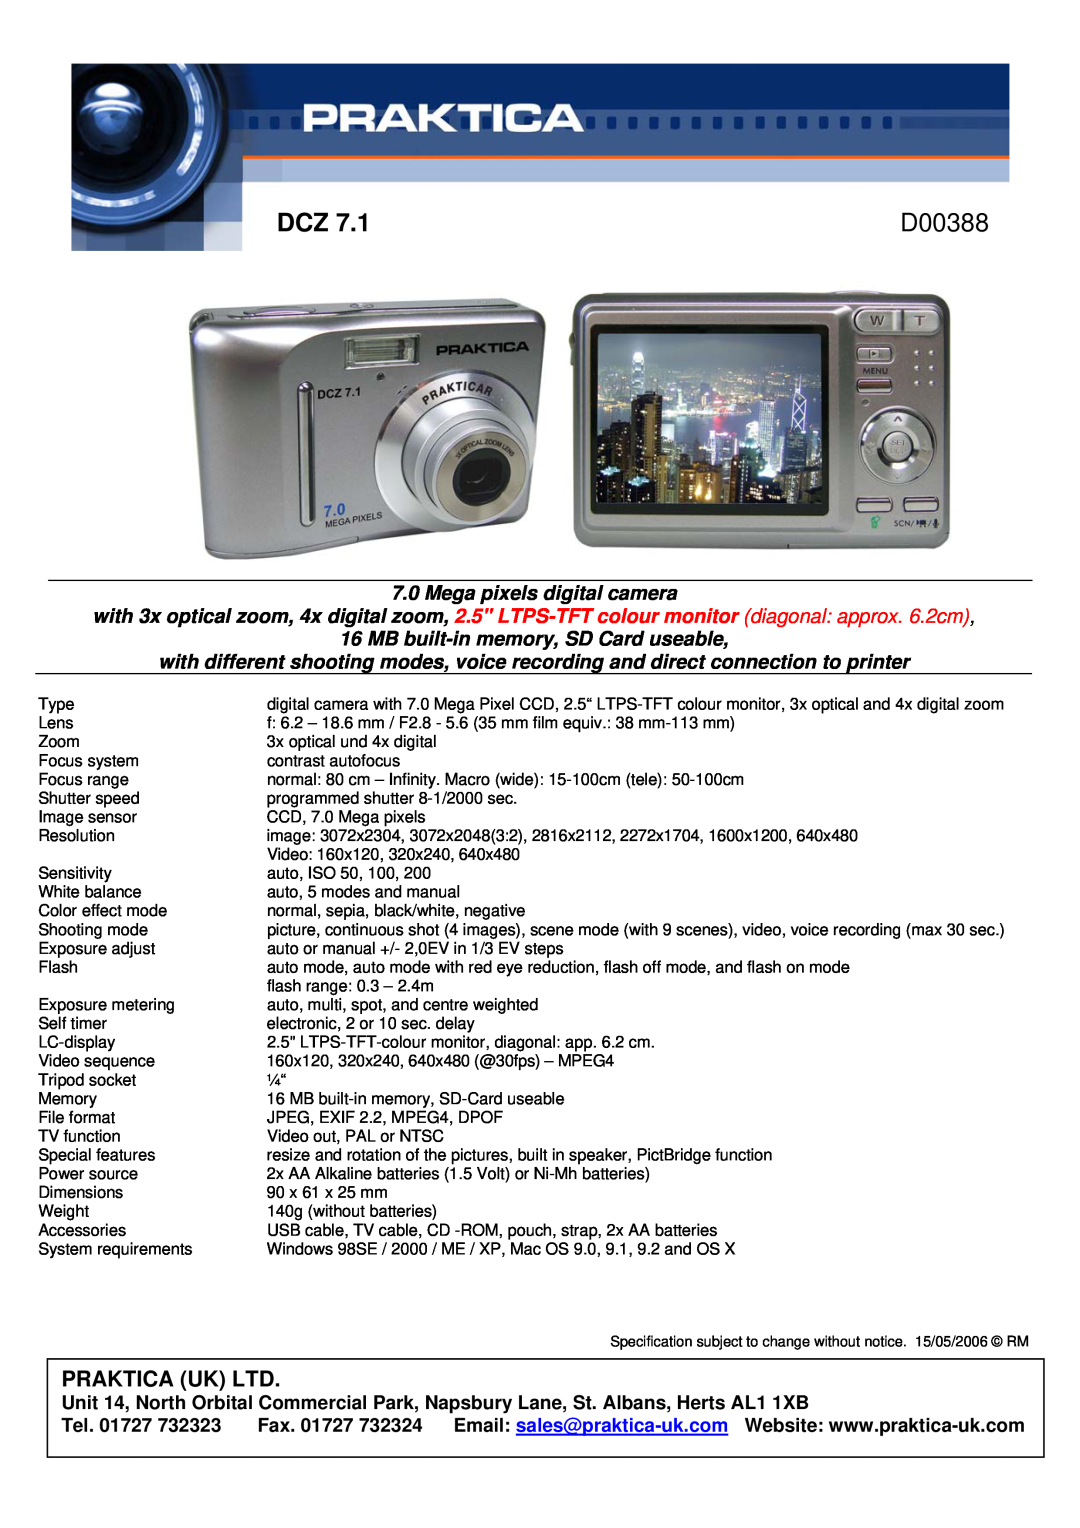 Praktica D00388 manual Praktica Dcz, Mega pixels digital camera, MB built-in memory, SD Card useable 